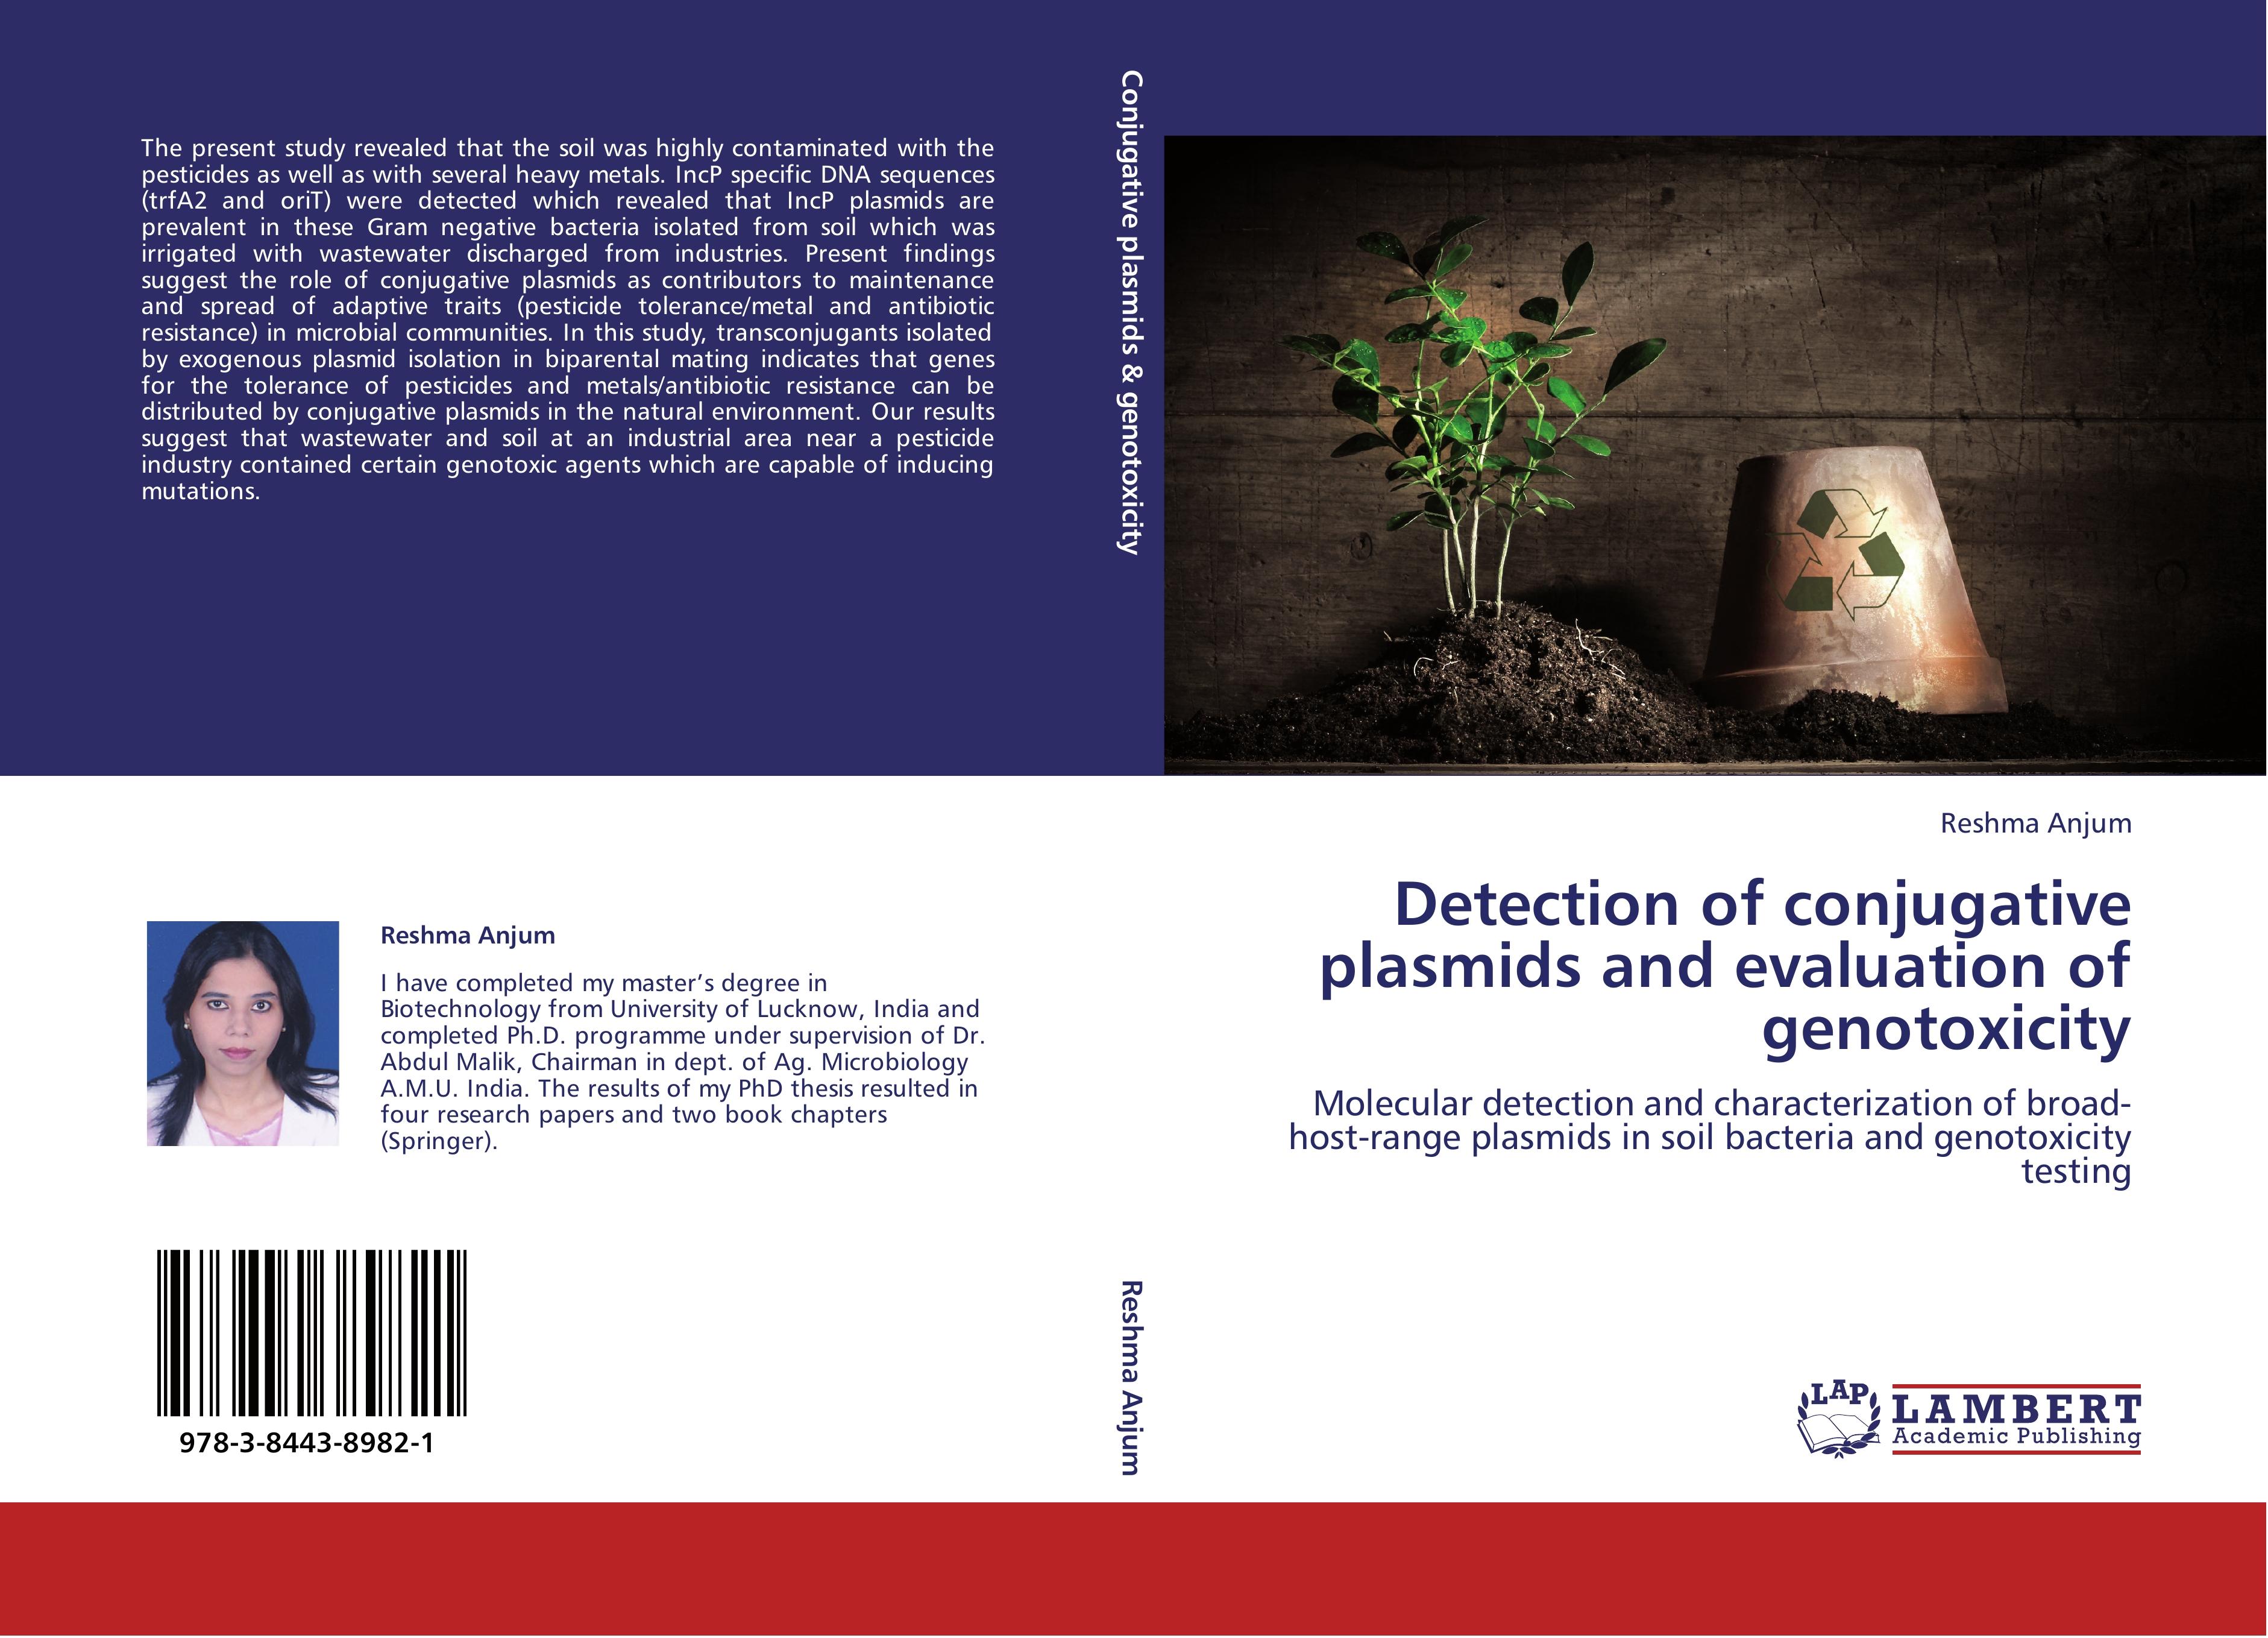 Detection of conjugative plasmids and evaluation of genotoxicity - Reshma Anjum